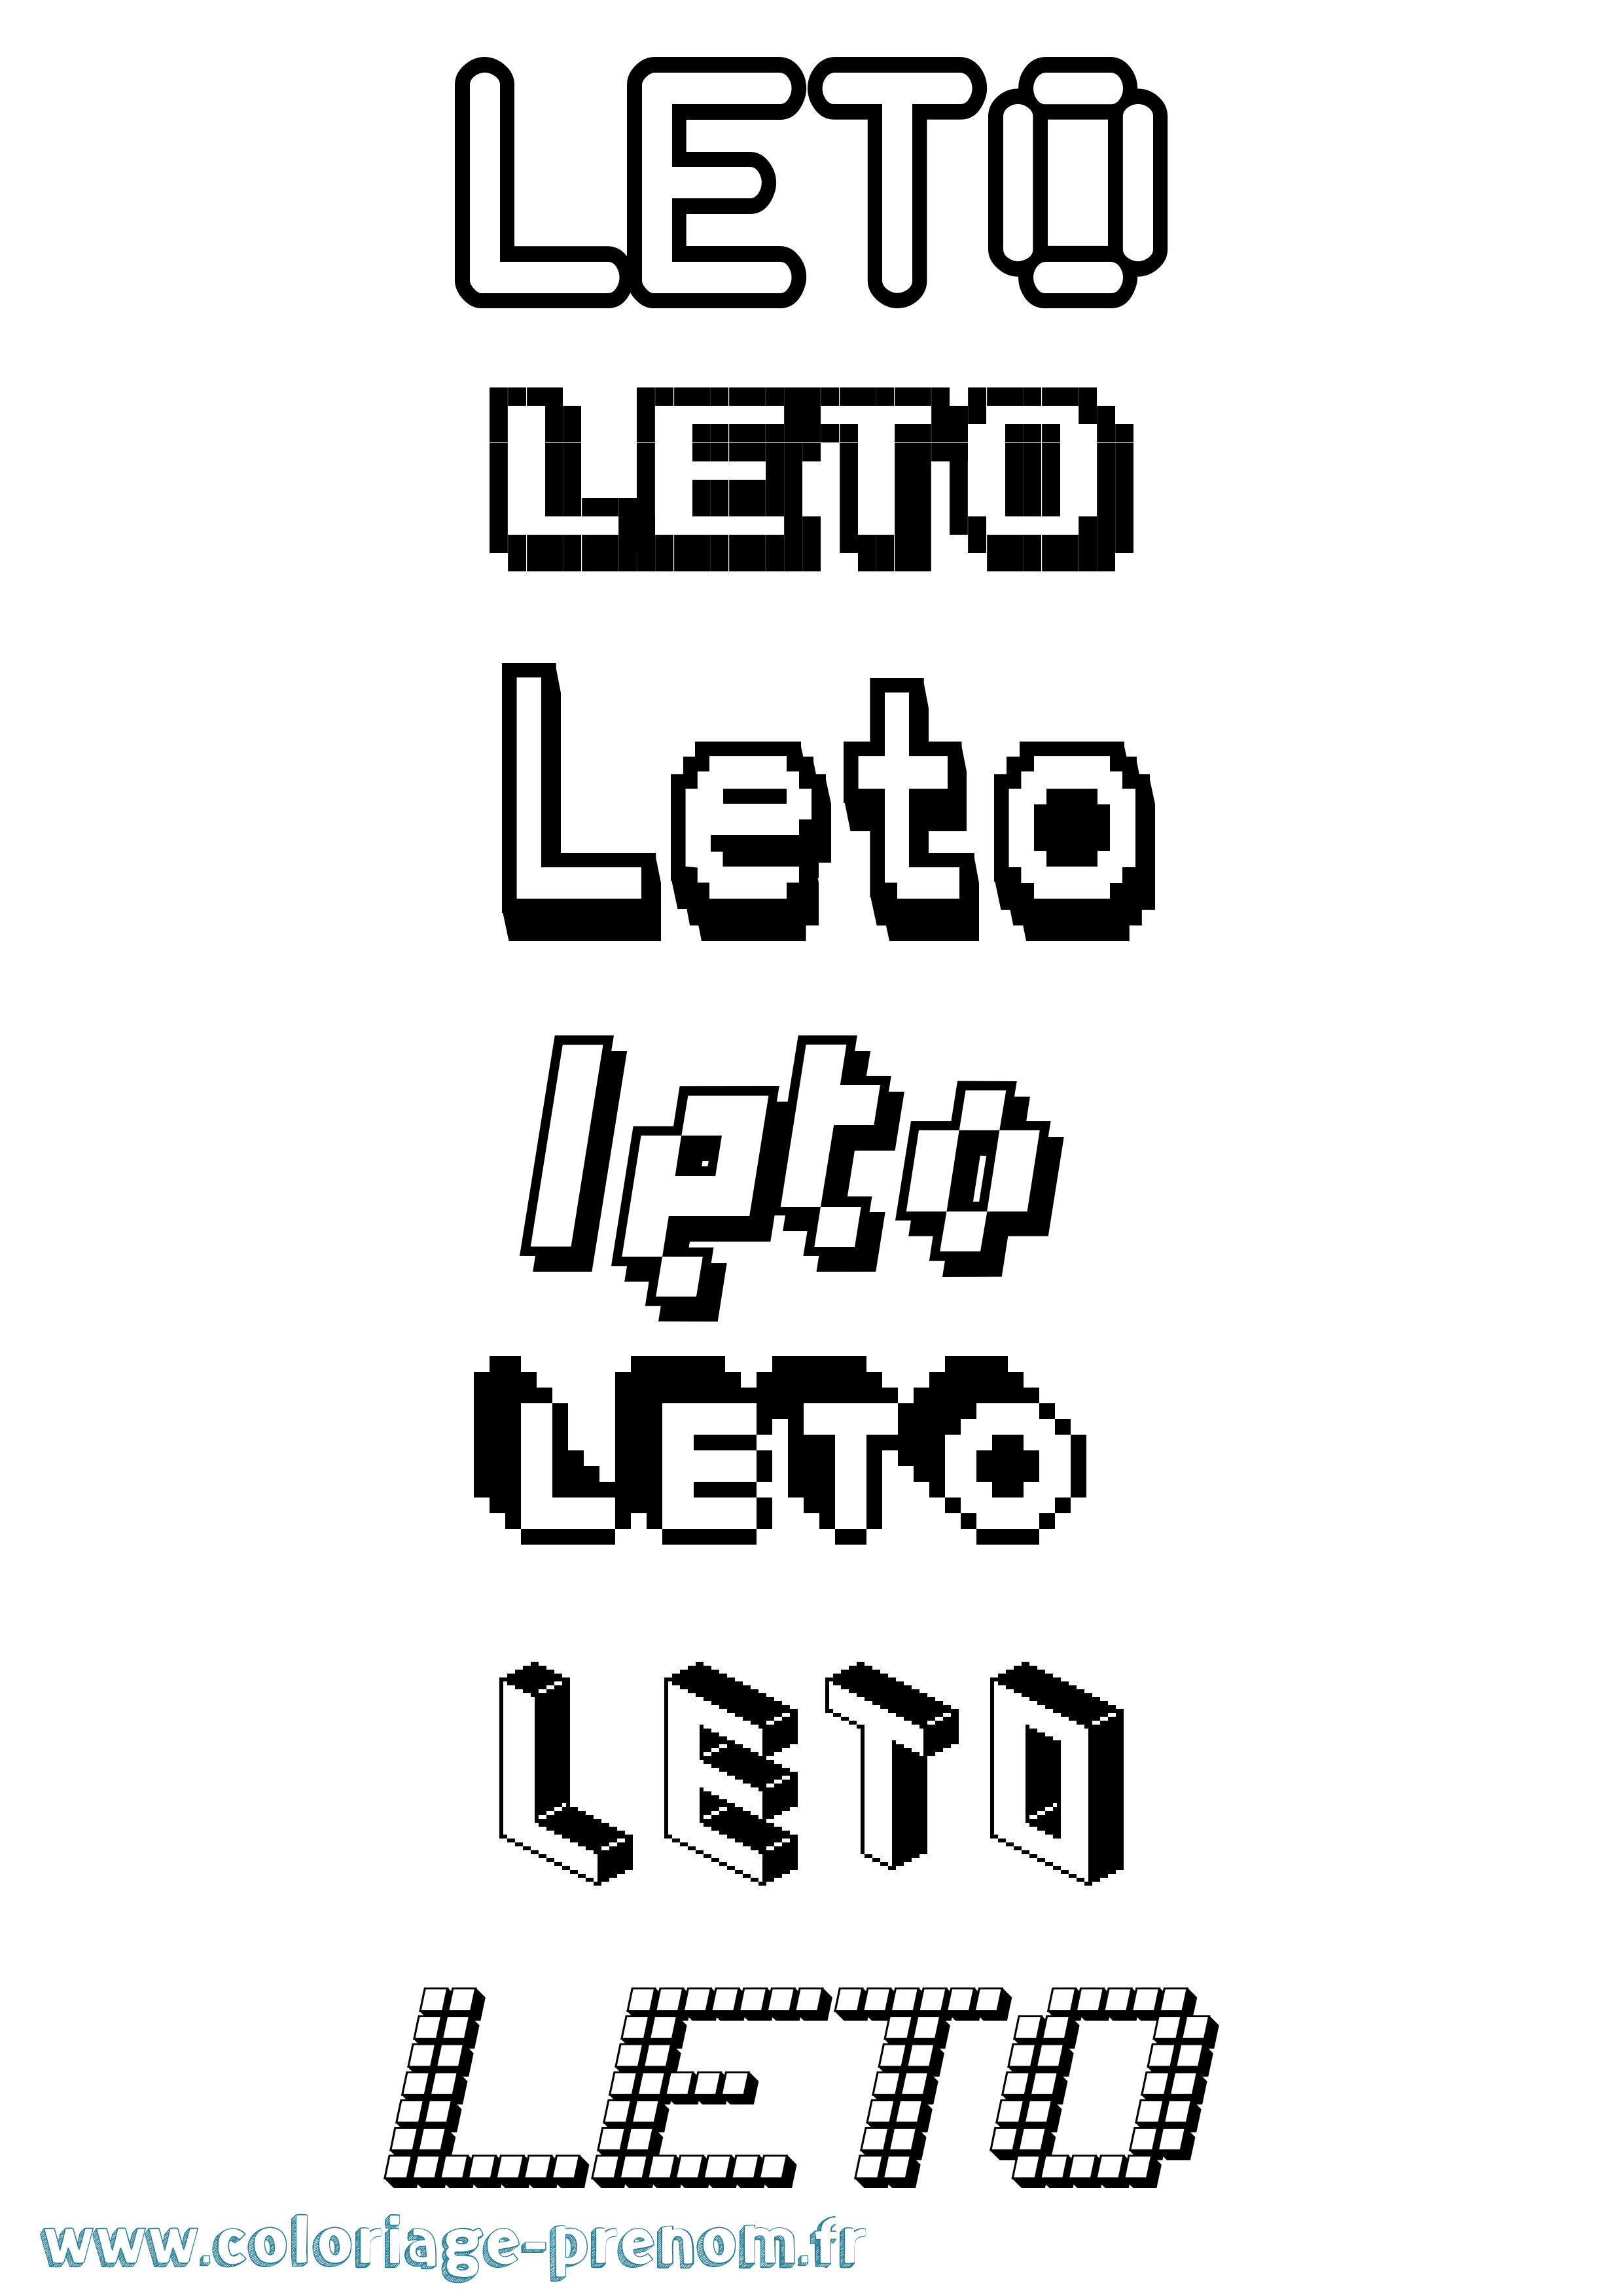 Coloriage prénom Leto Pixel